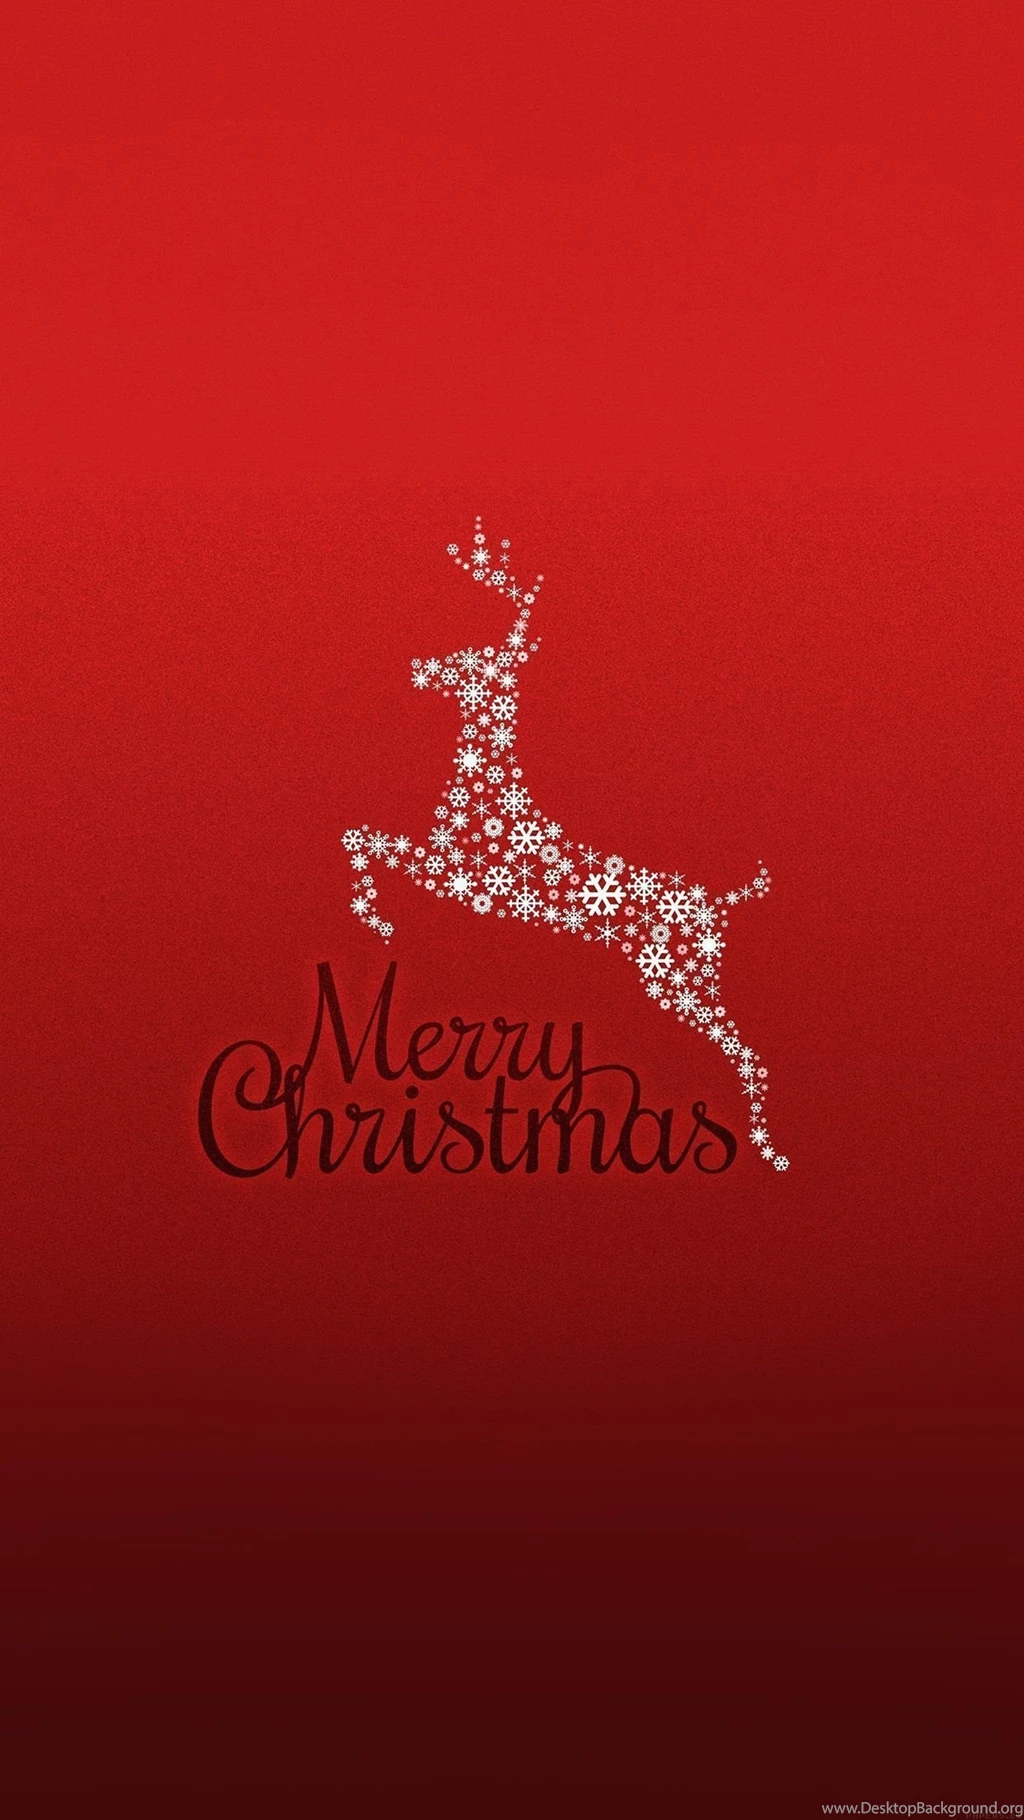 Merry Christmas Rudolf Art 34 Iphone6 Plus Wallpaper Jpg Desktop Background